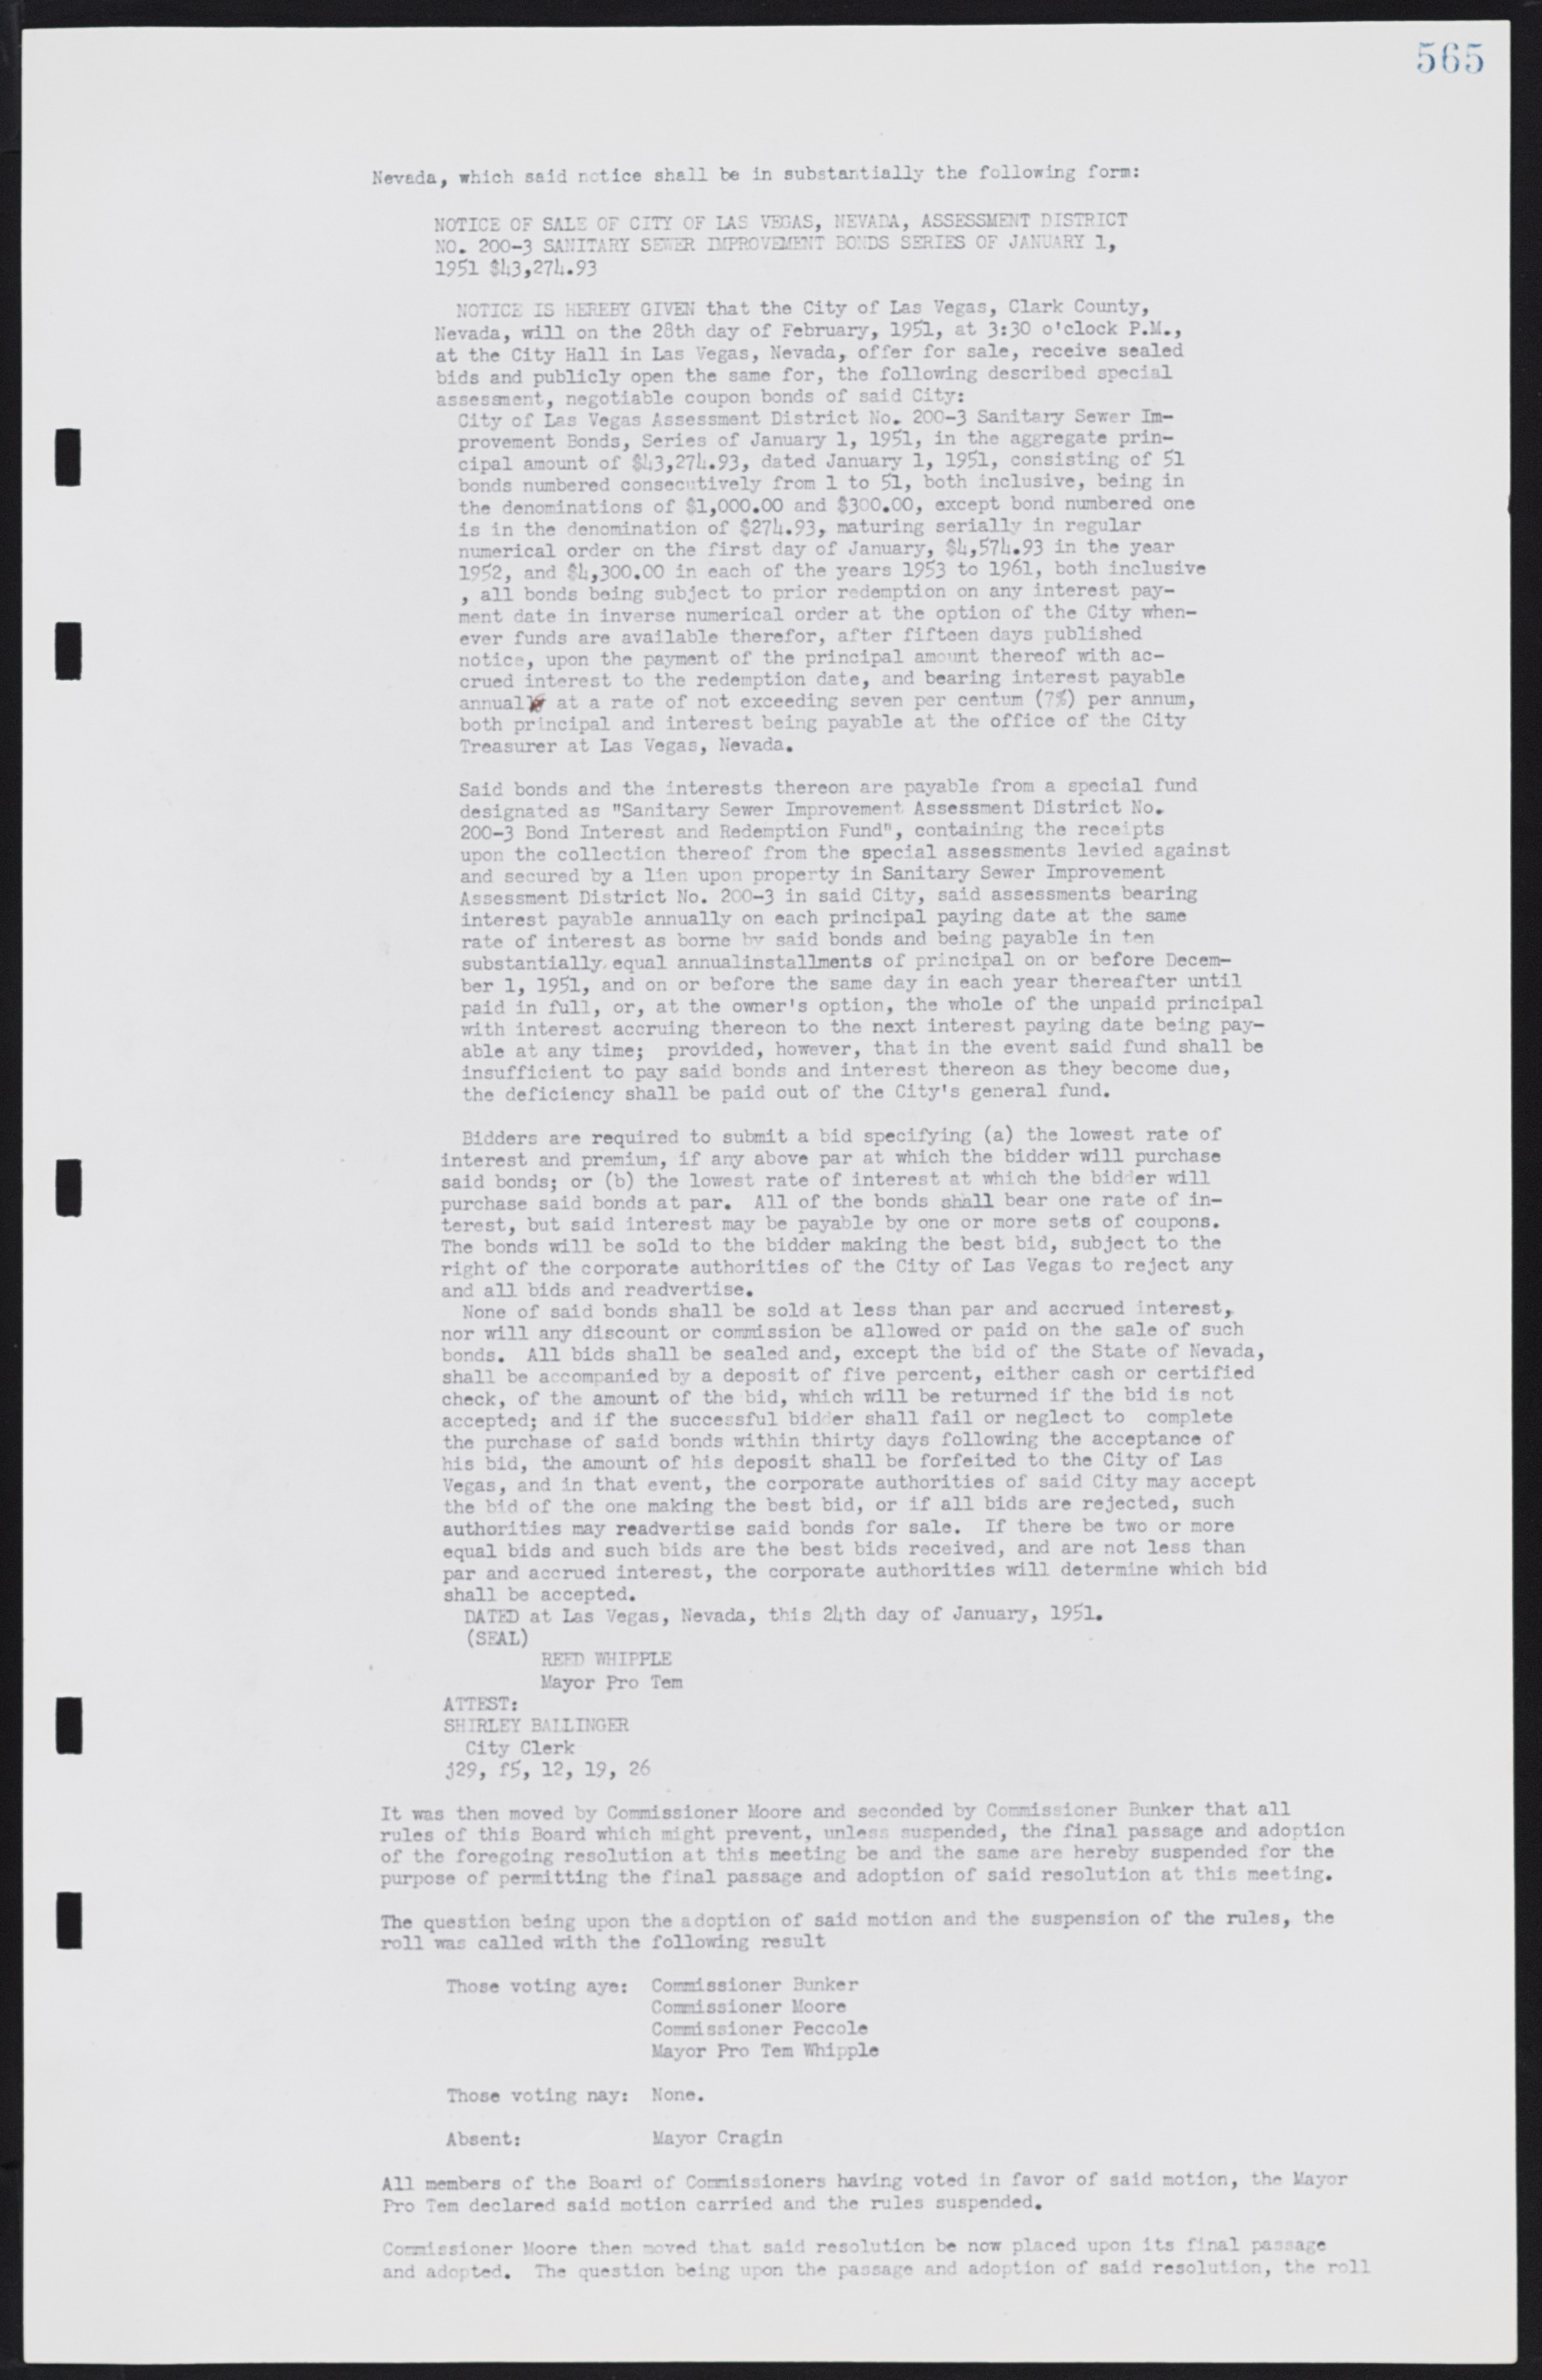 Las Vegas City Commission Minutes, January 7, 1947 to October 26, 1949, lvc000006-596